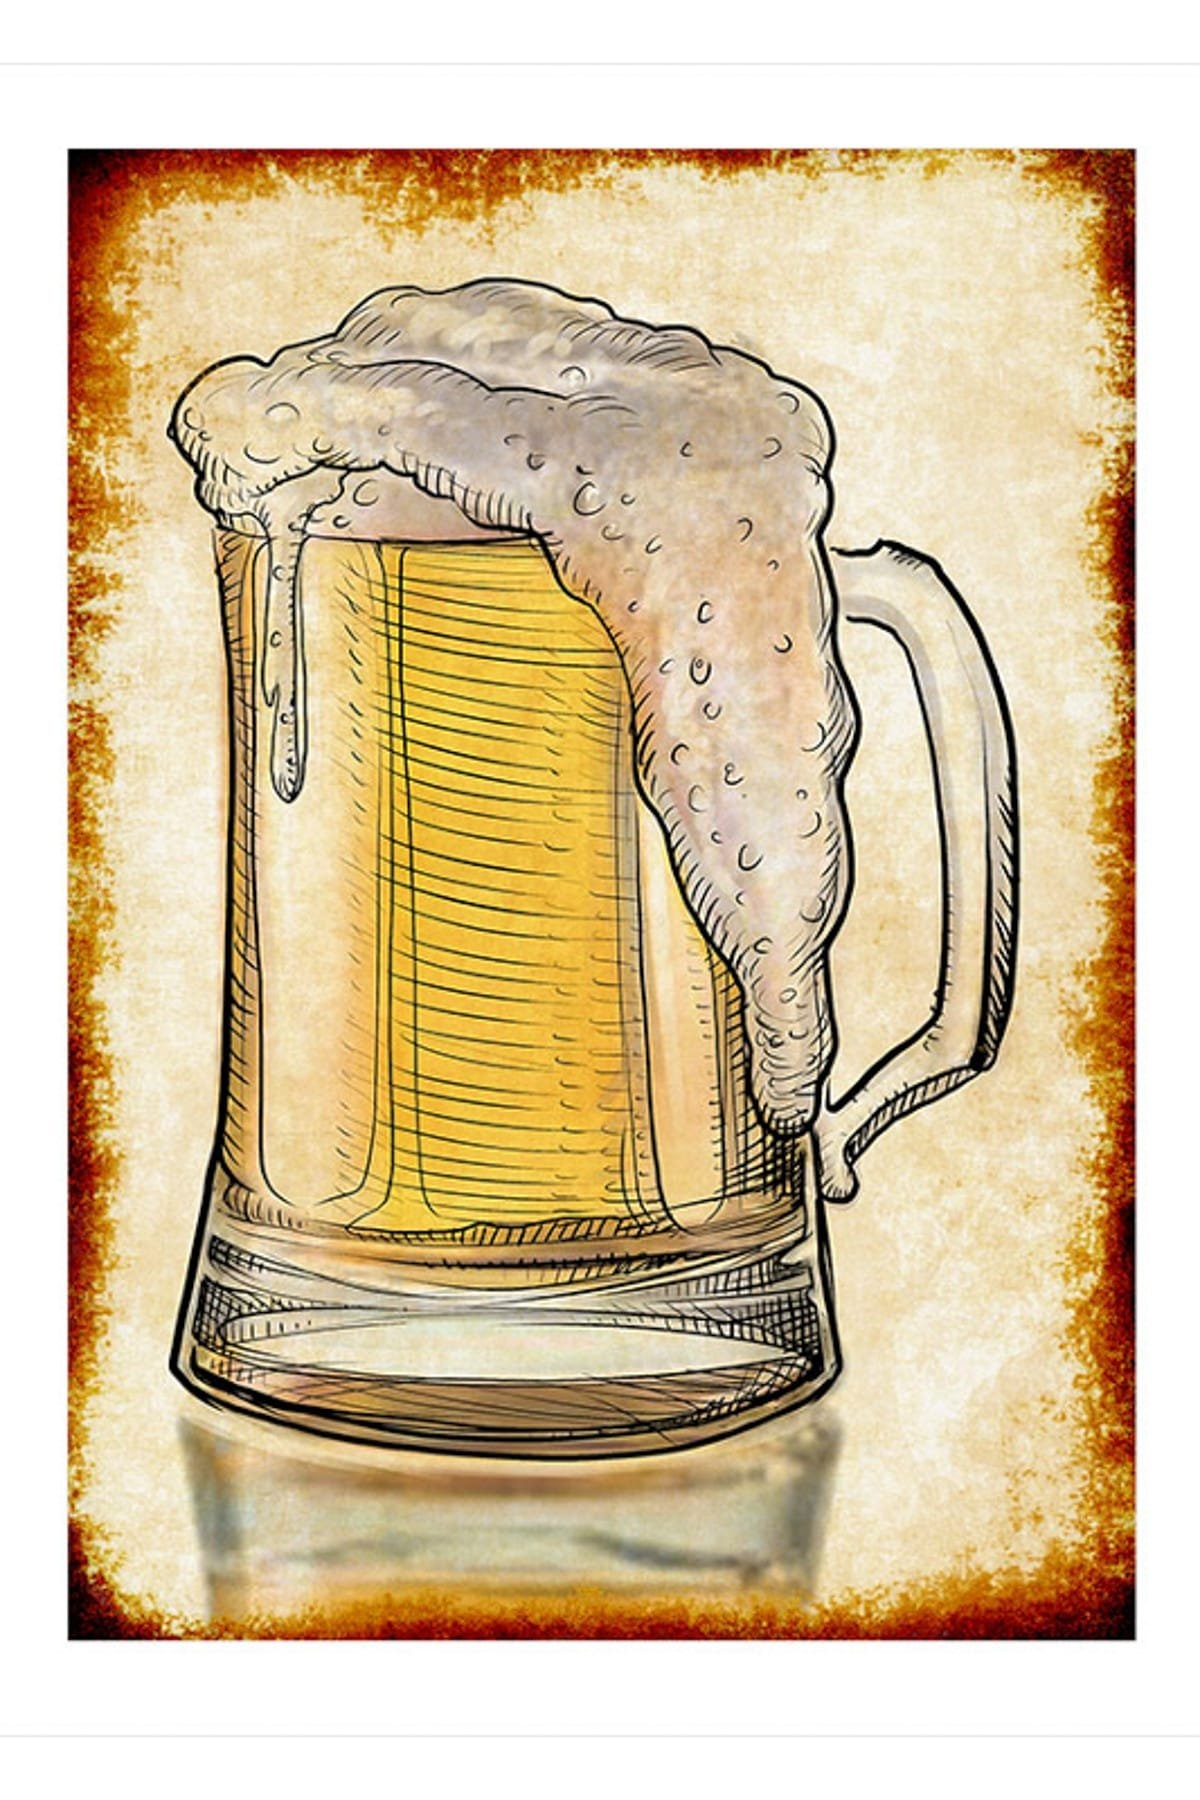 Картина для магазина пива